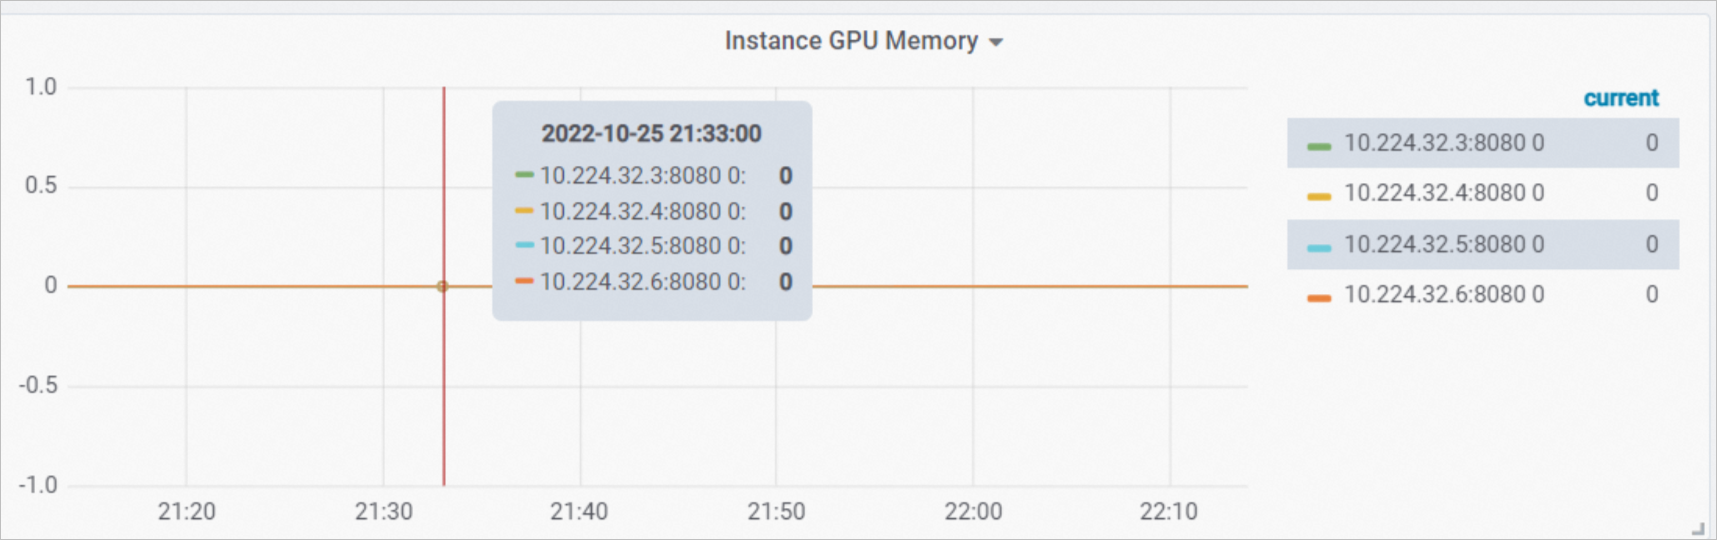 Instance GPU Memory